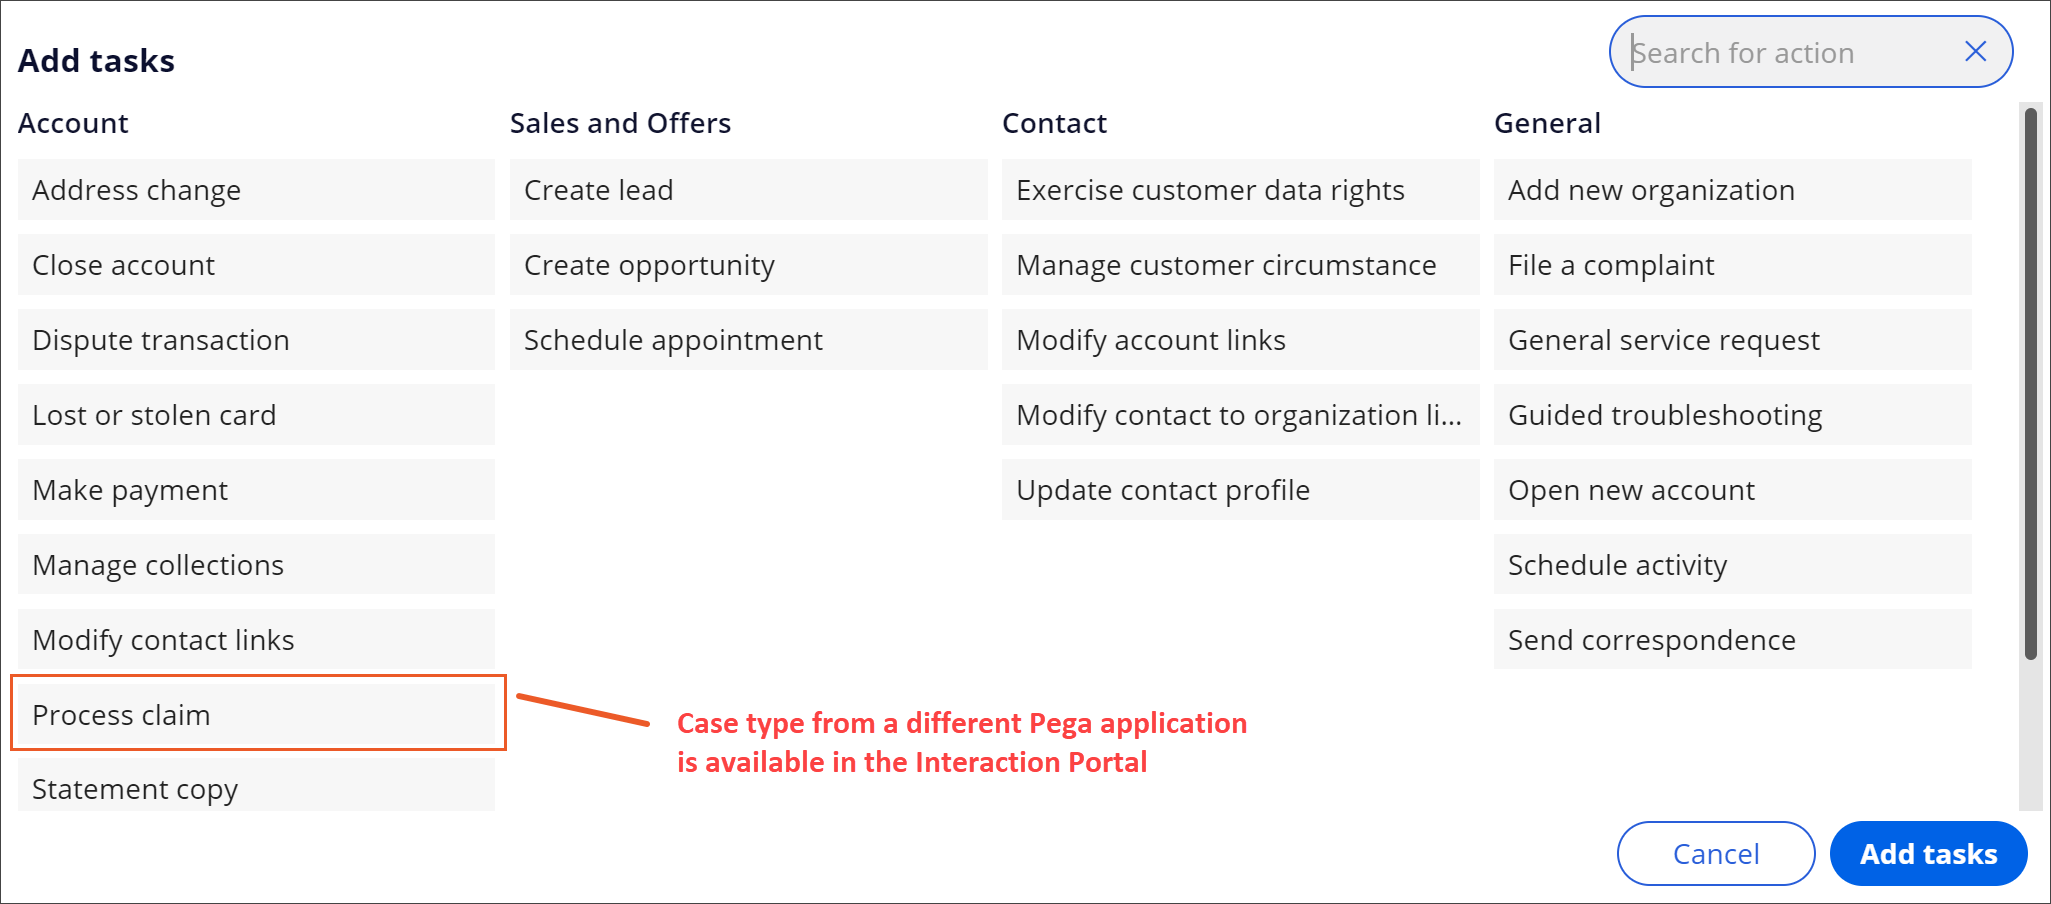 Tasks for other Pega Platform applications are displayed on the Add Task menu